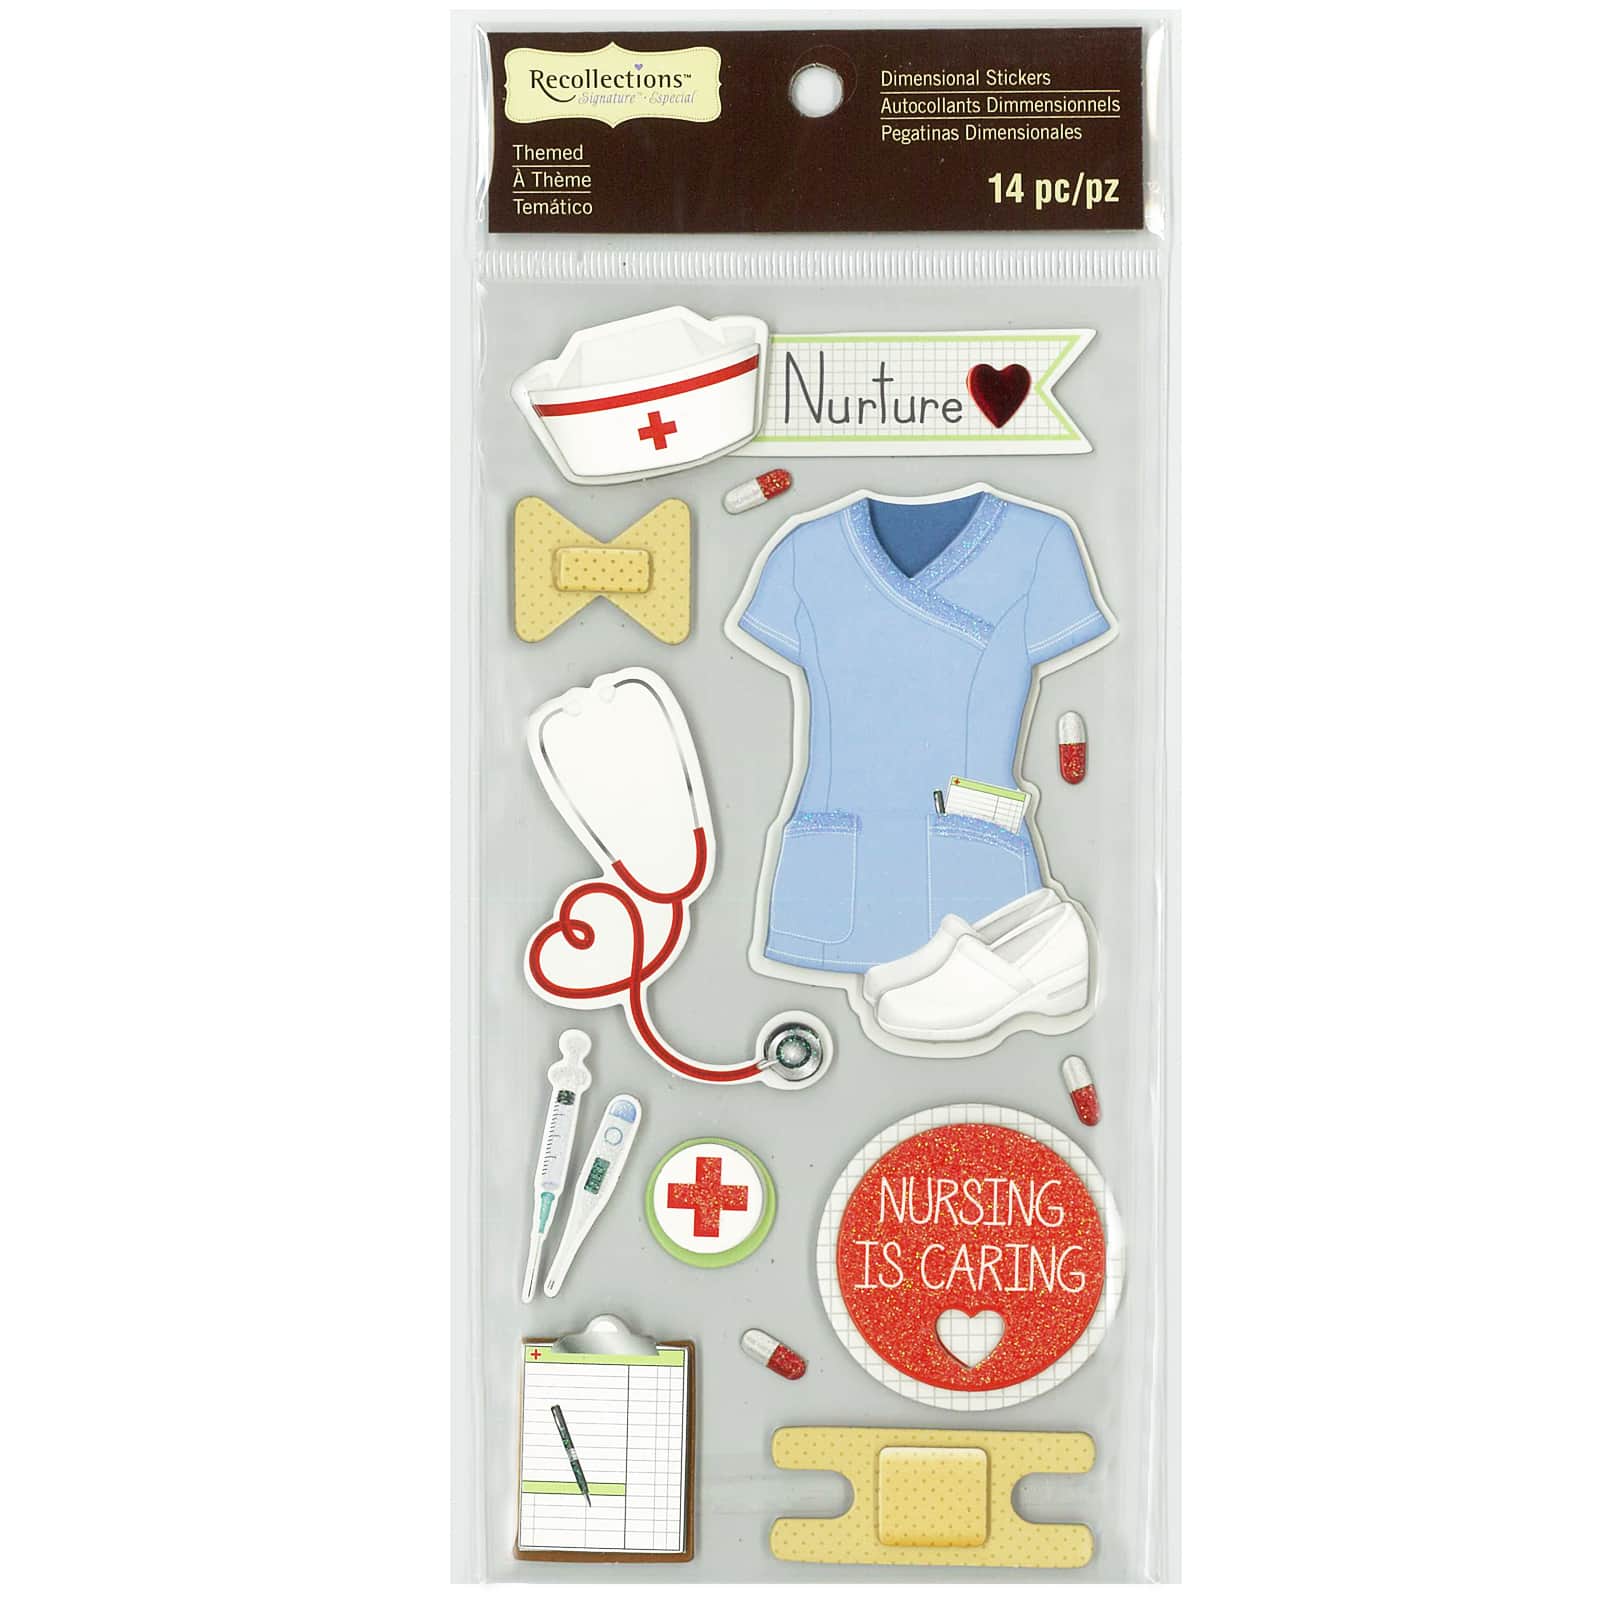 La Petites Dimensional Stickers The Paper Studio Nurse Stickers 9